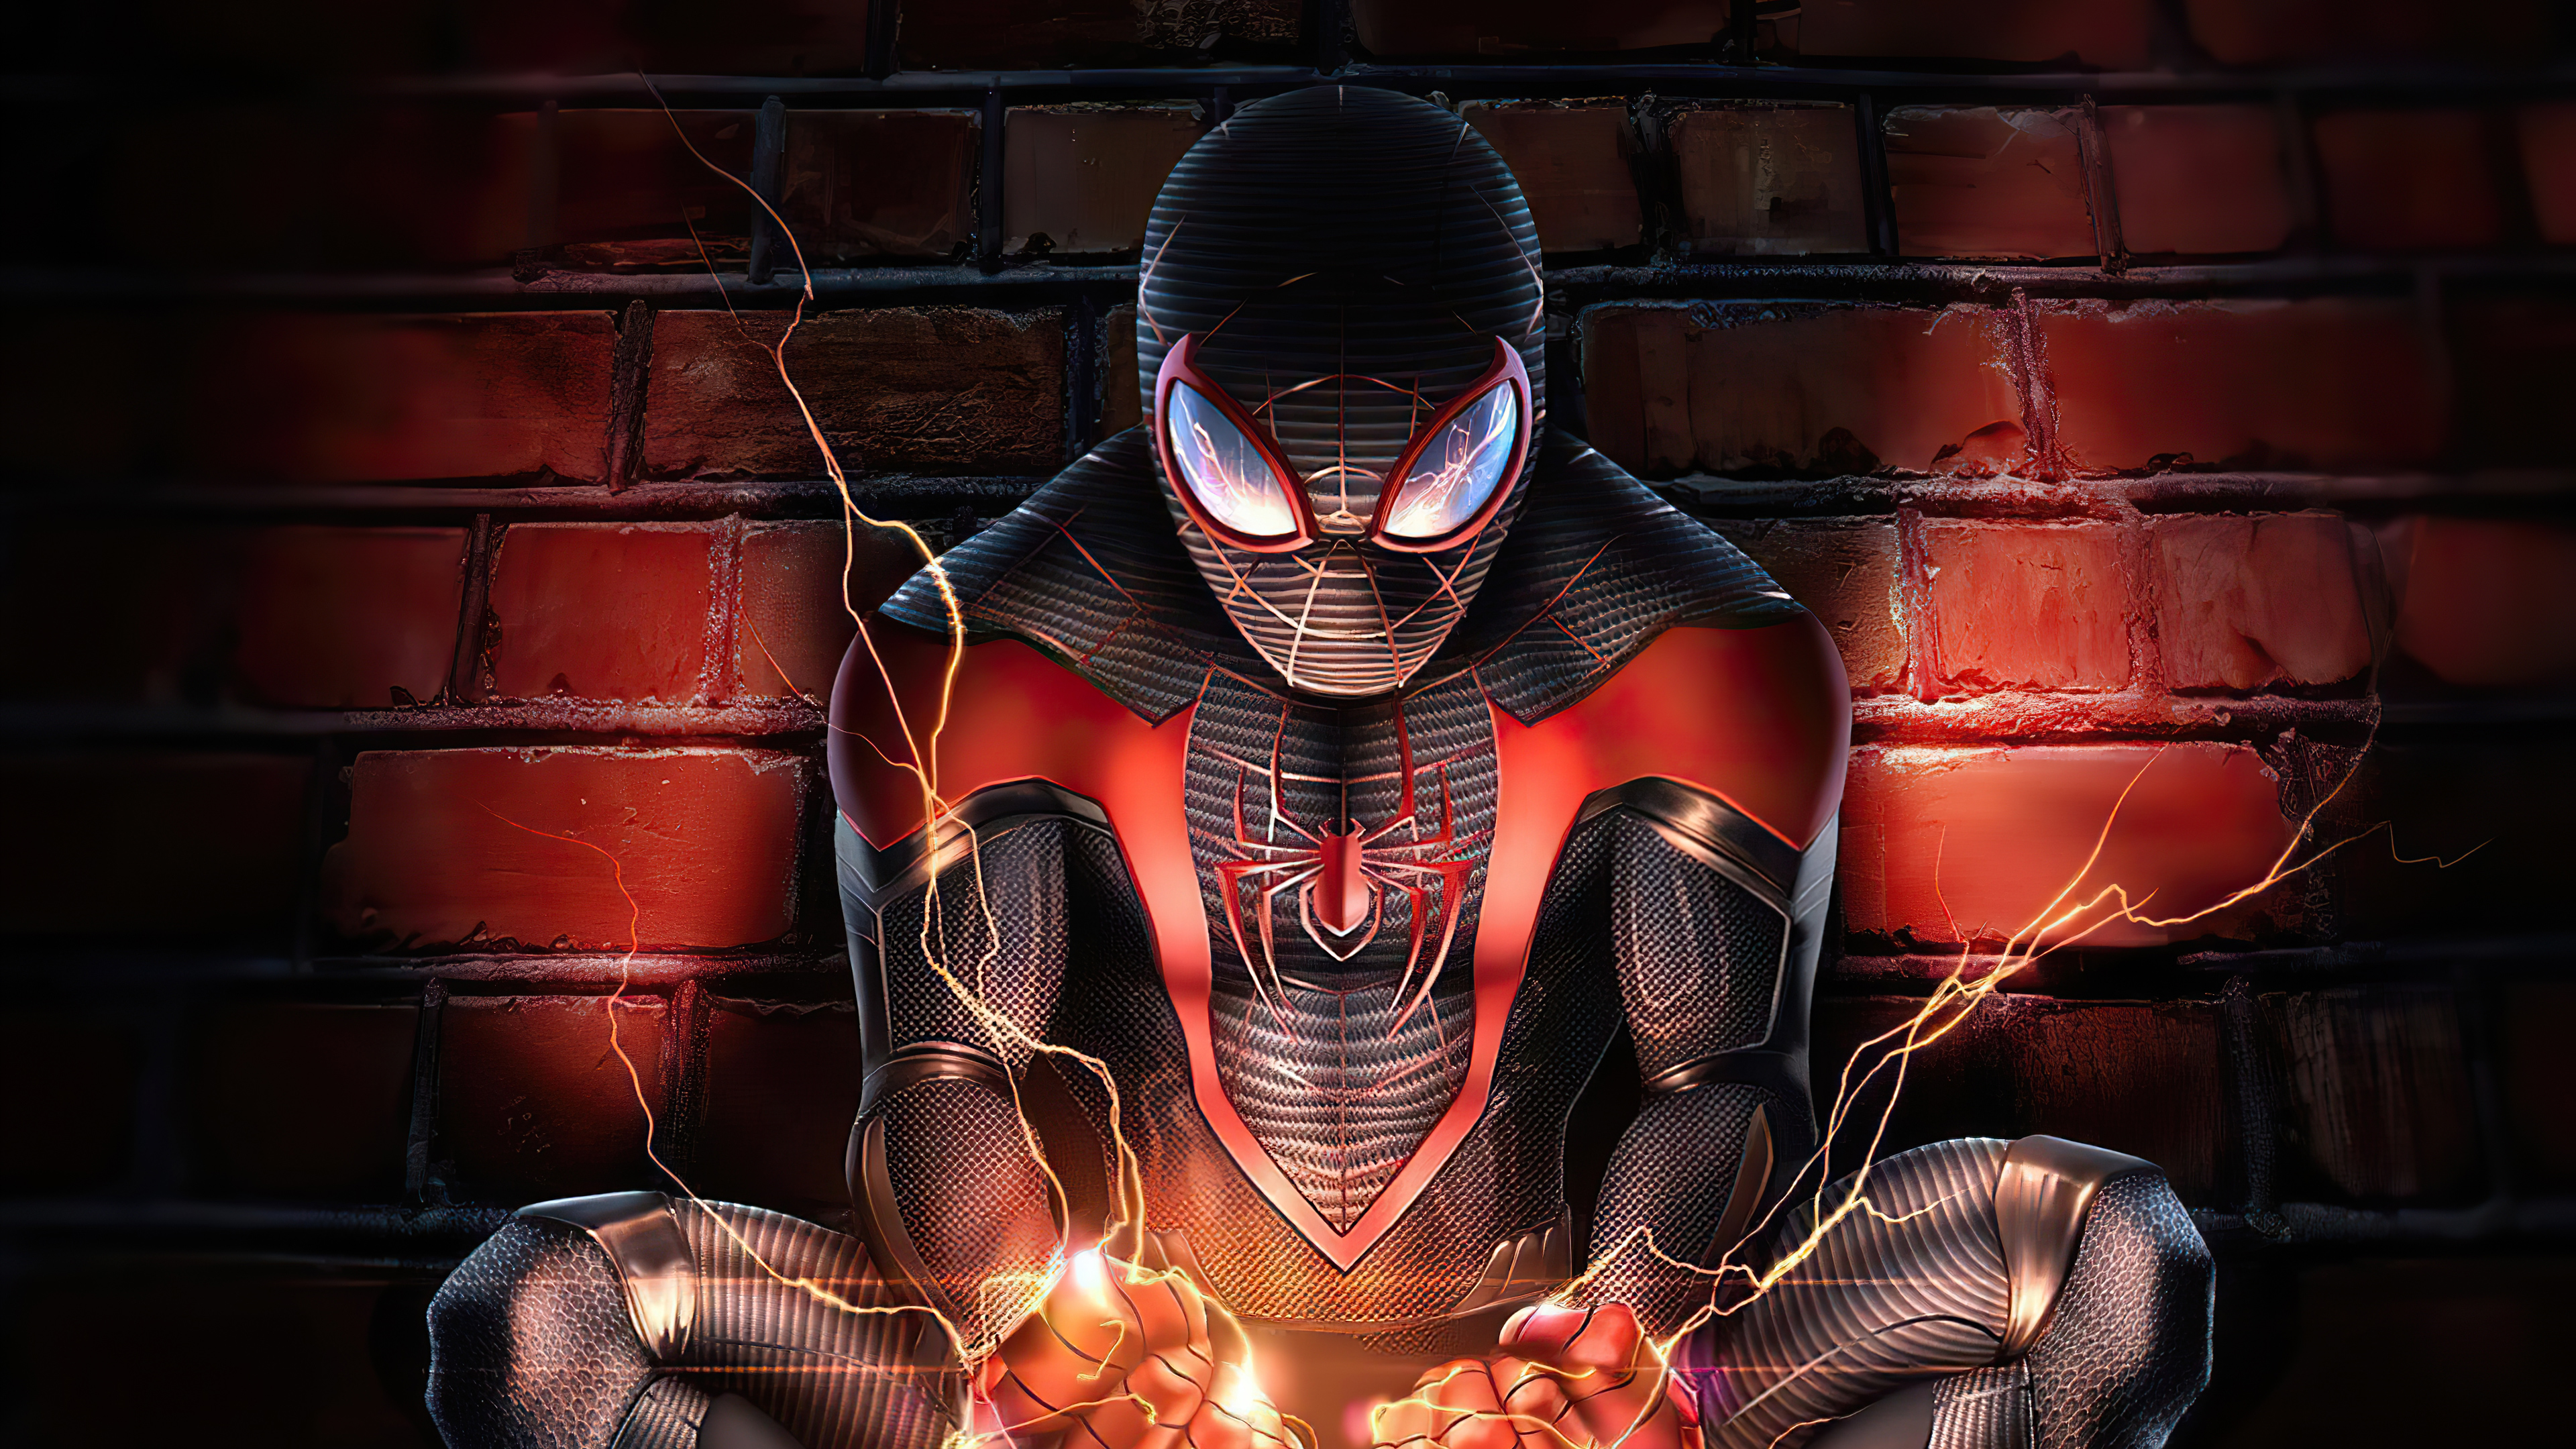 Marvel Spider Man New 4K Wallpaper, HD Superheroes 4K Wallpapers